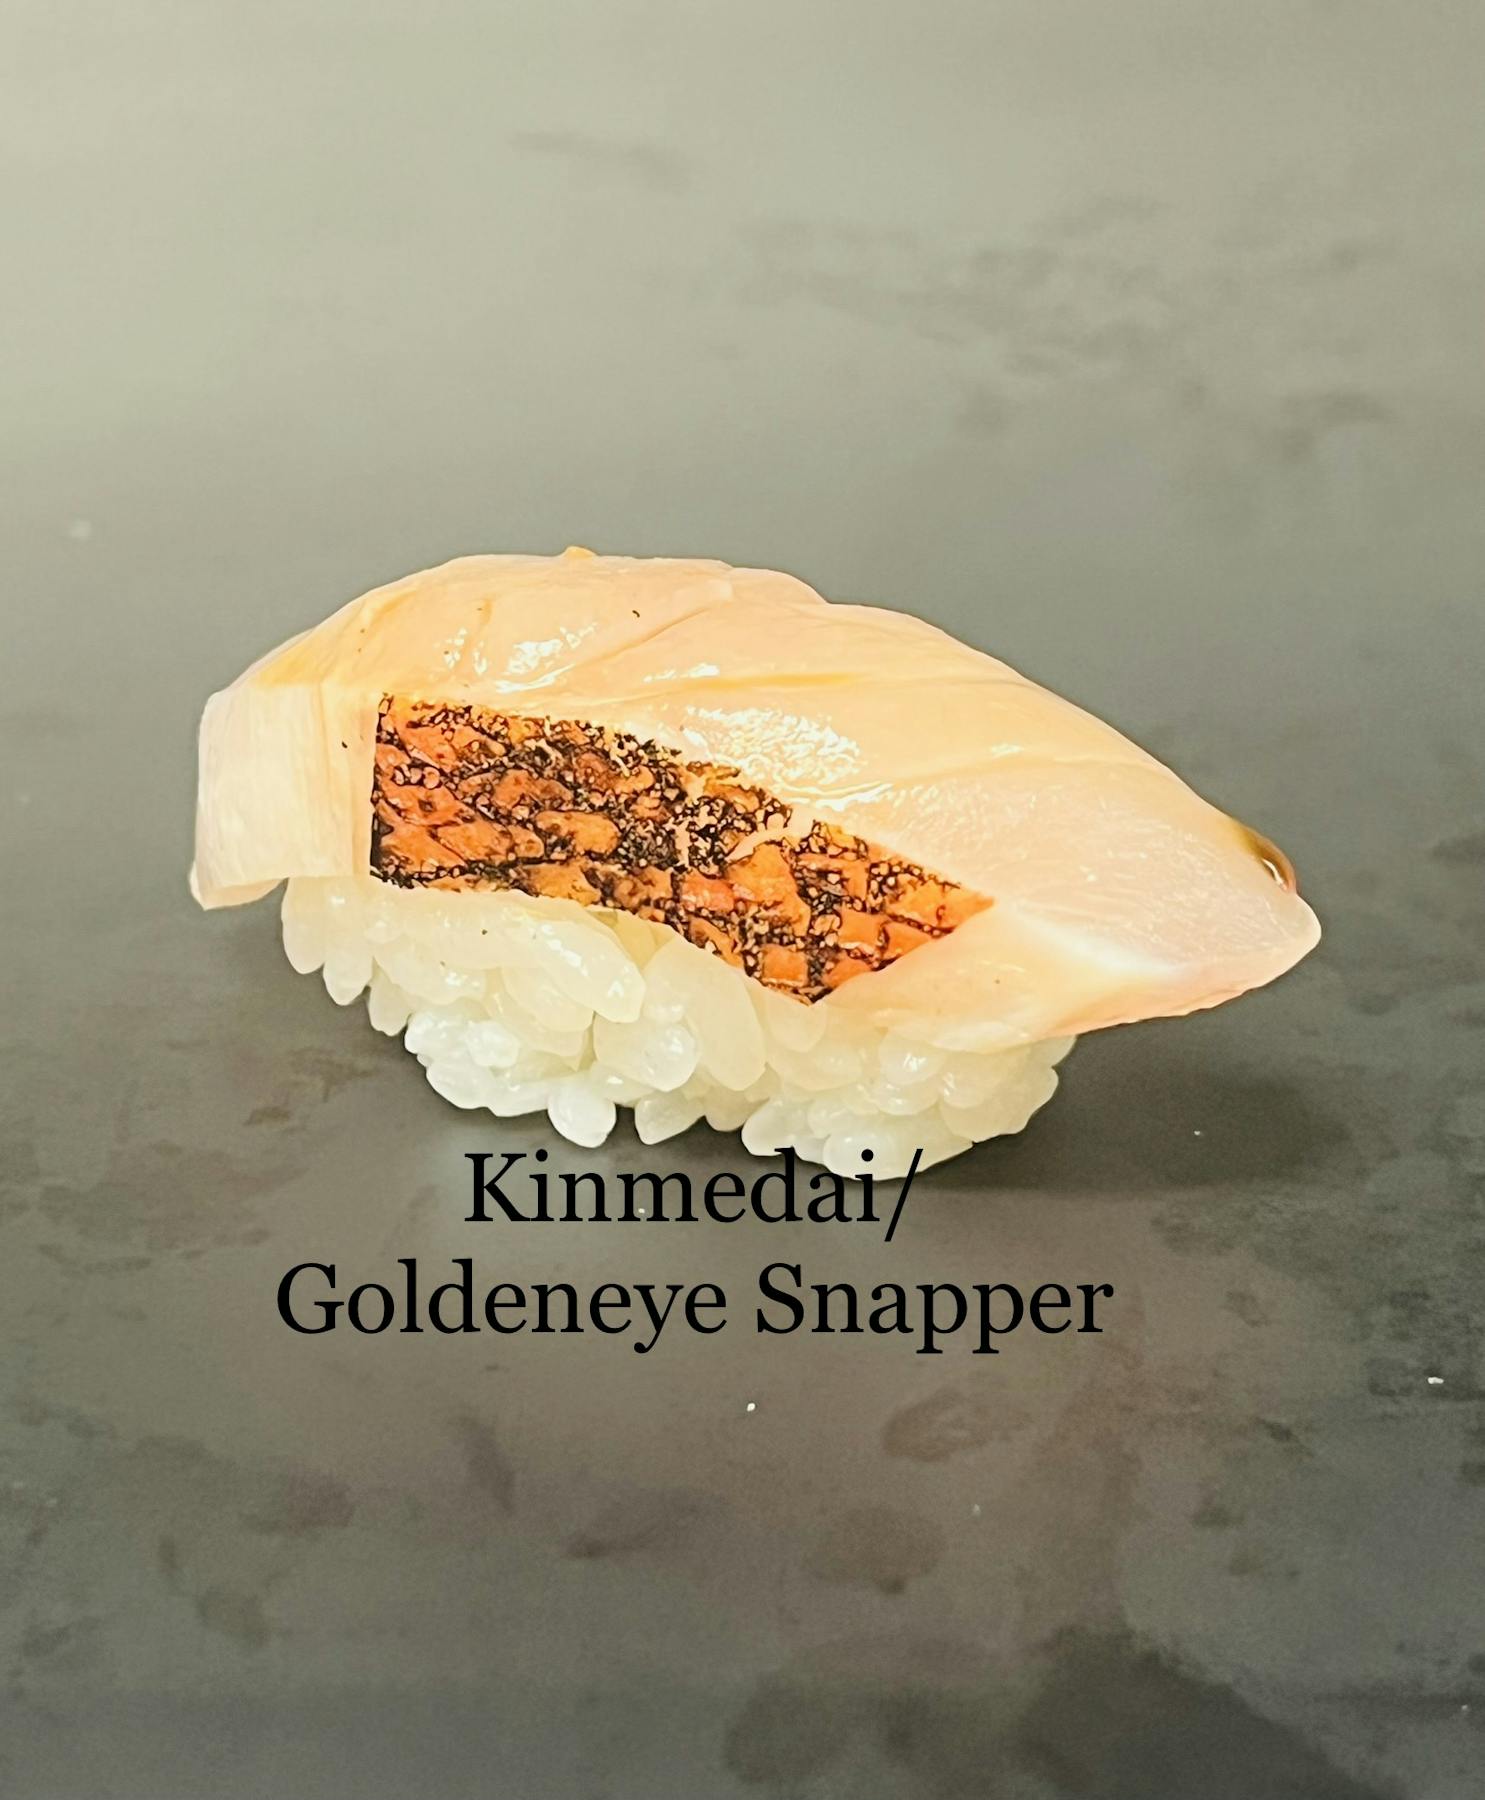 15 East - Seared Golden Eye Snapper, Seared kinmedai (golde…